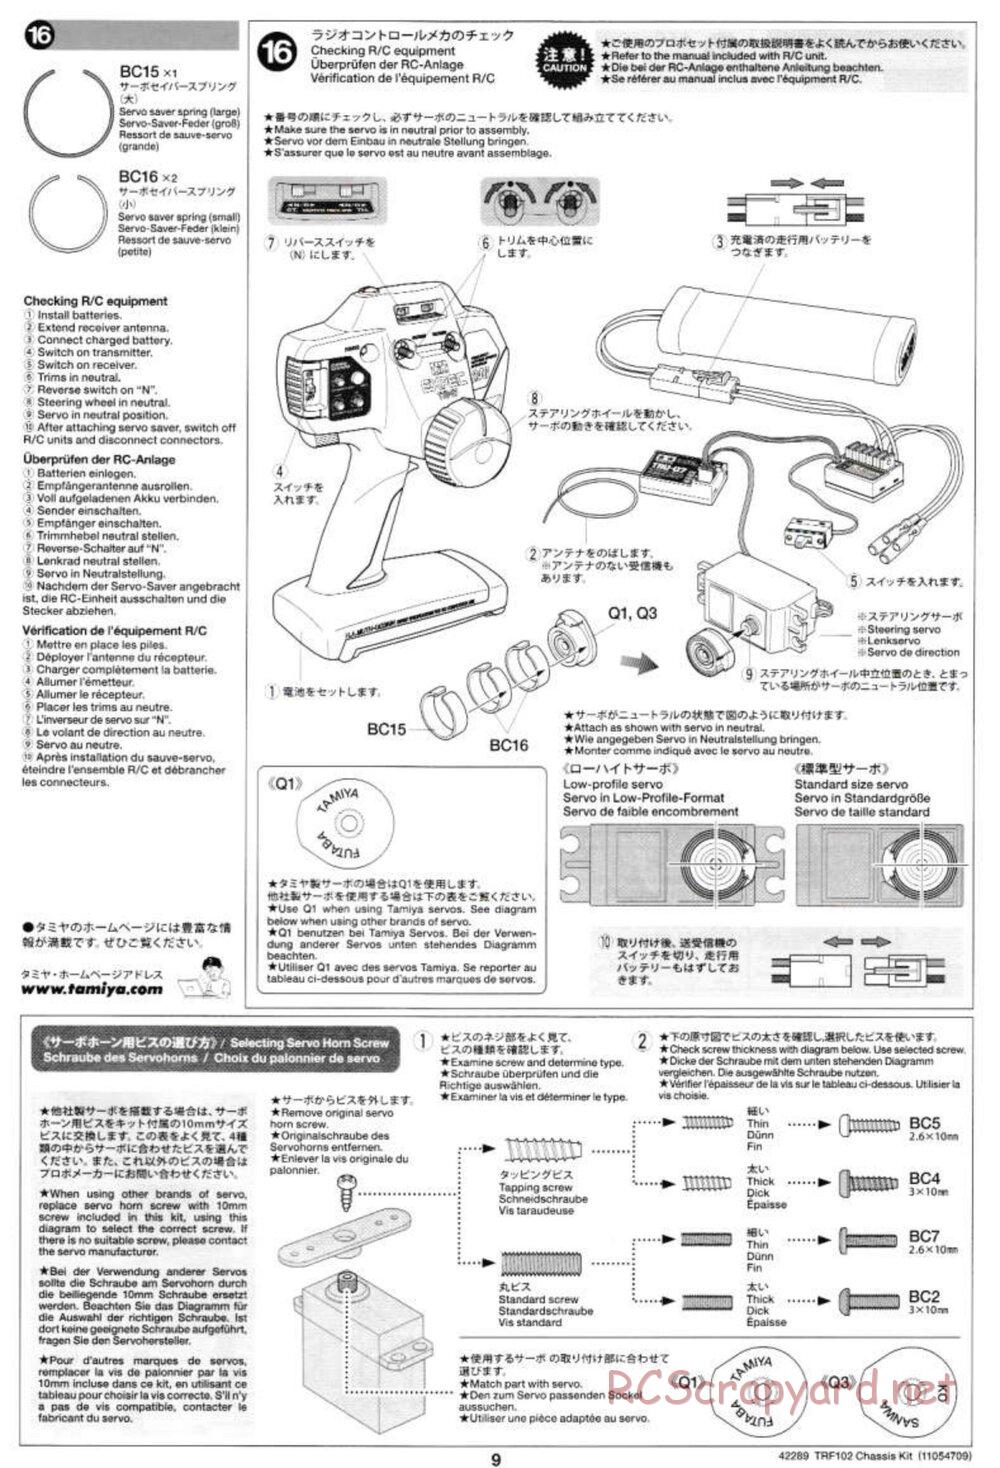 Tamiya - TRF102 Chassis - Manual - Page 9